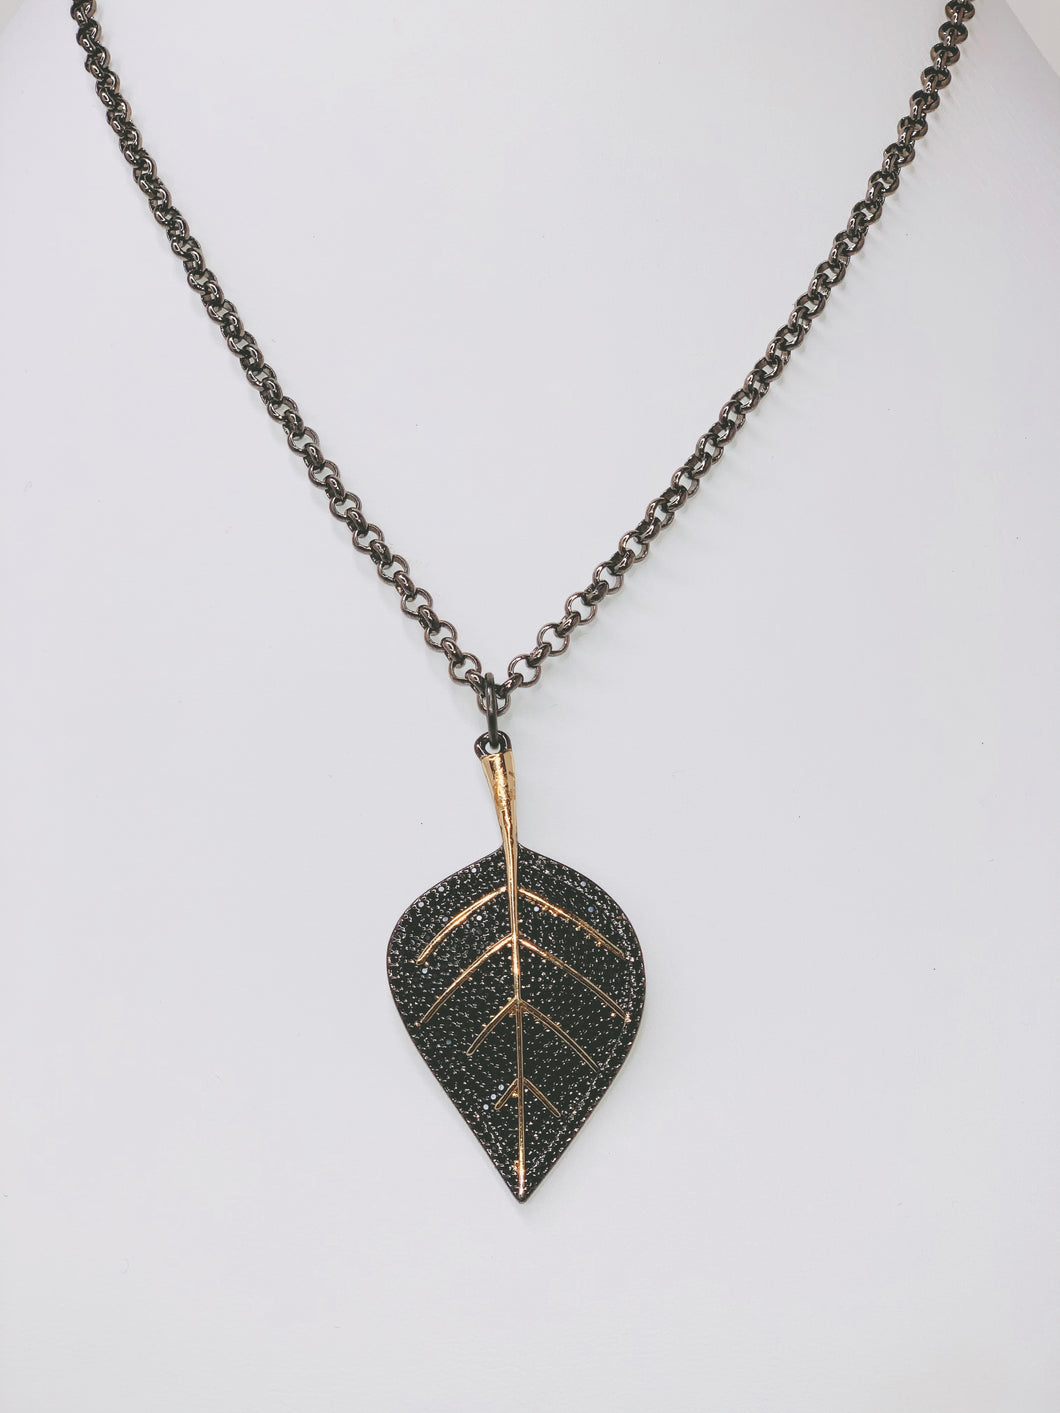 Leaf pendant necklace.